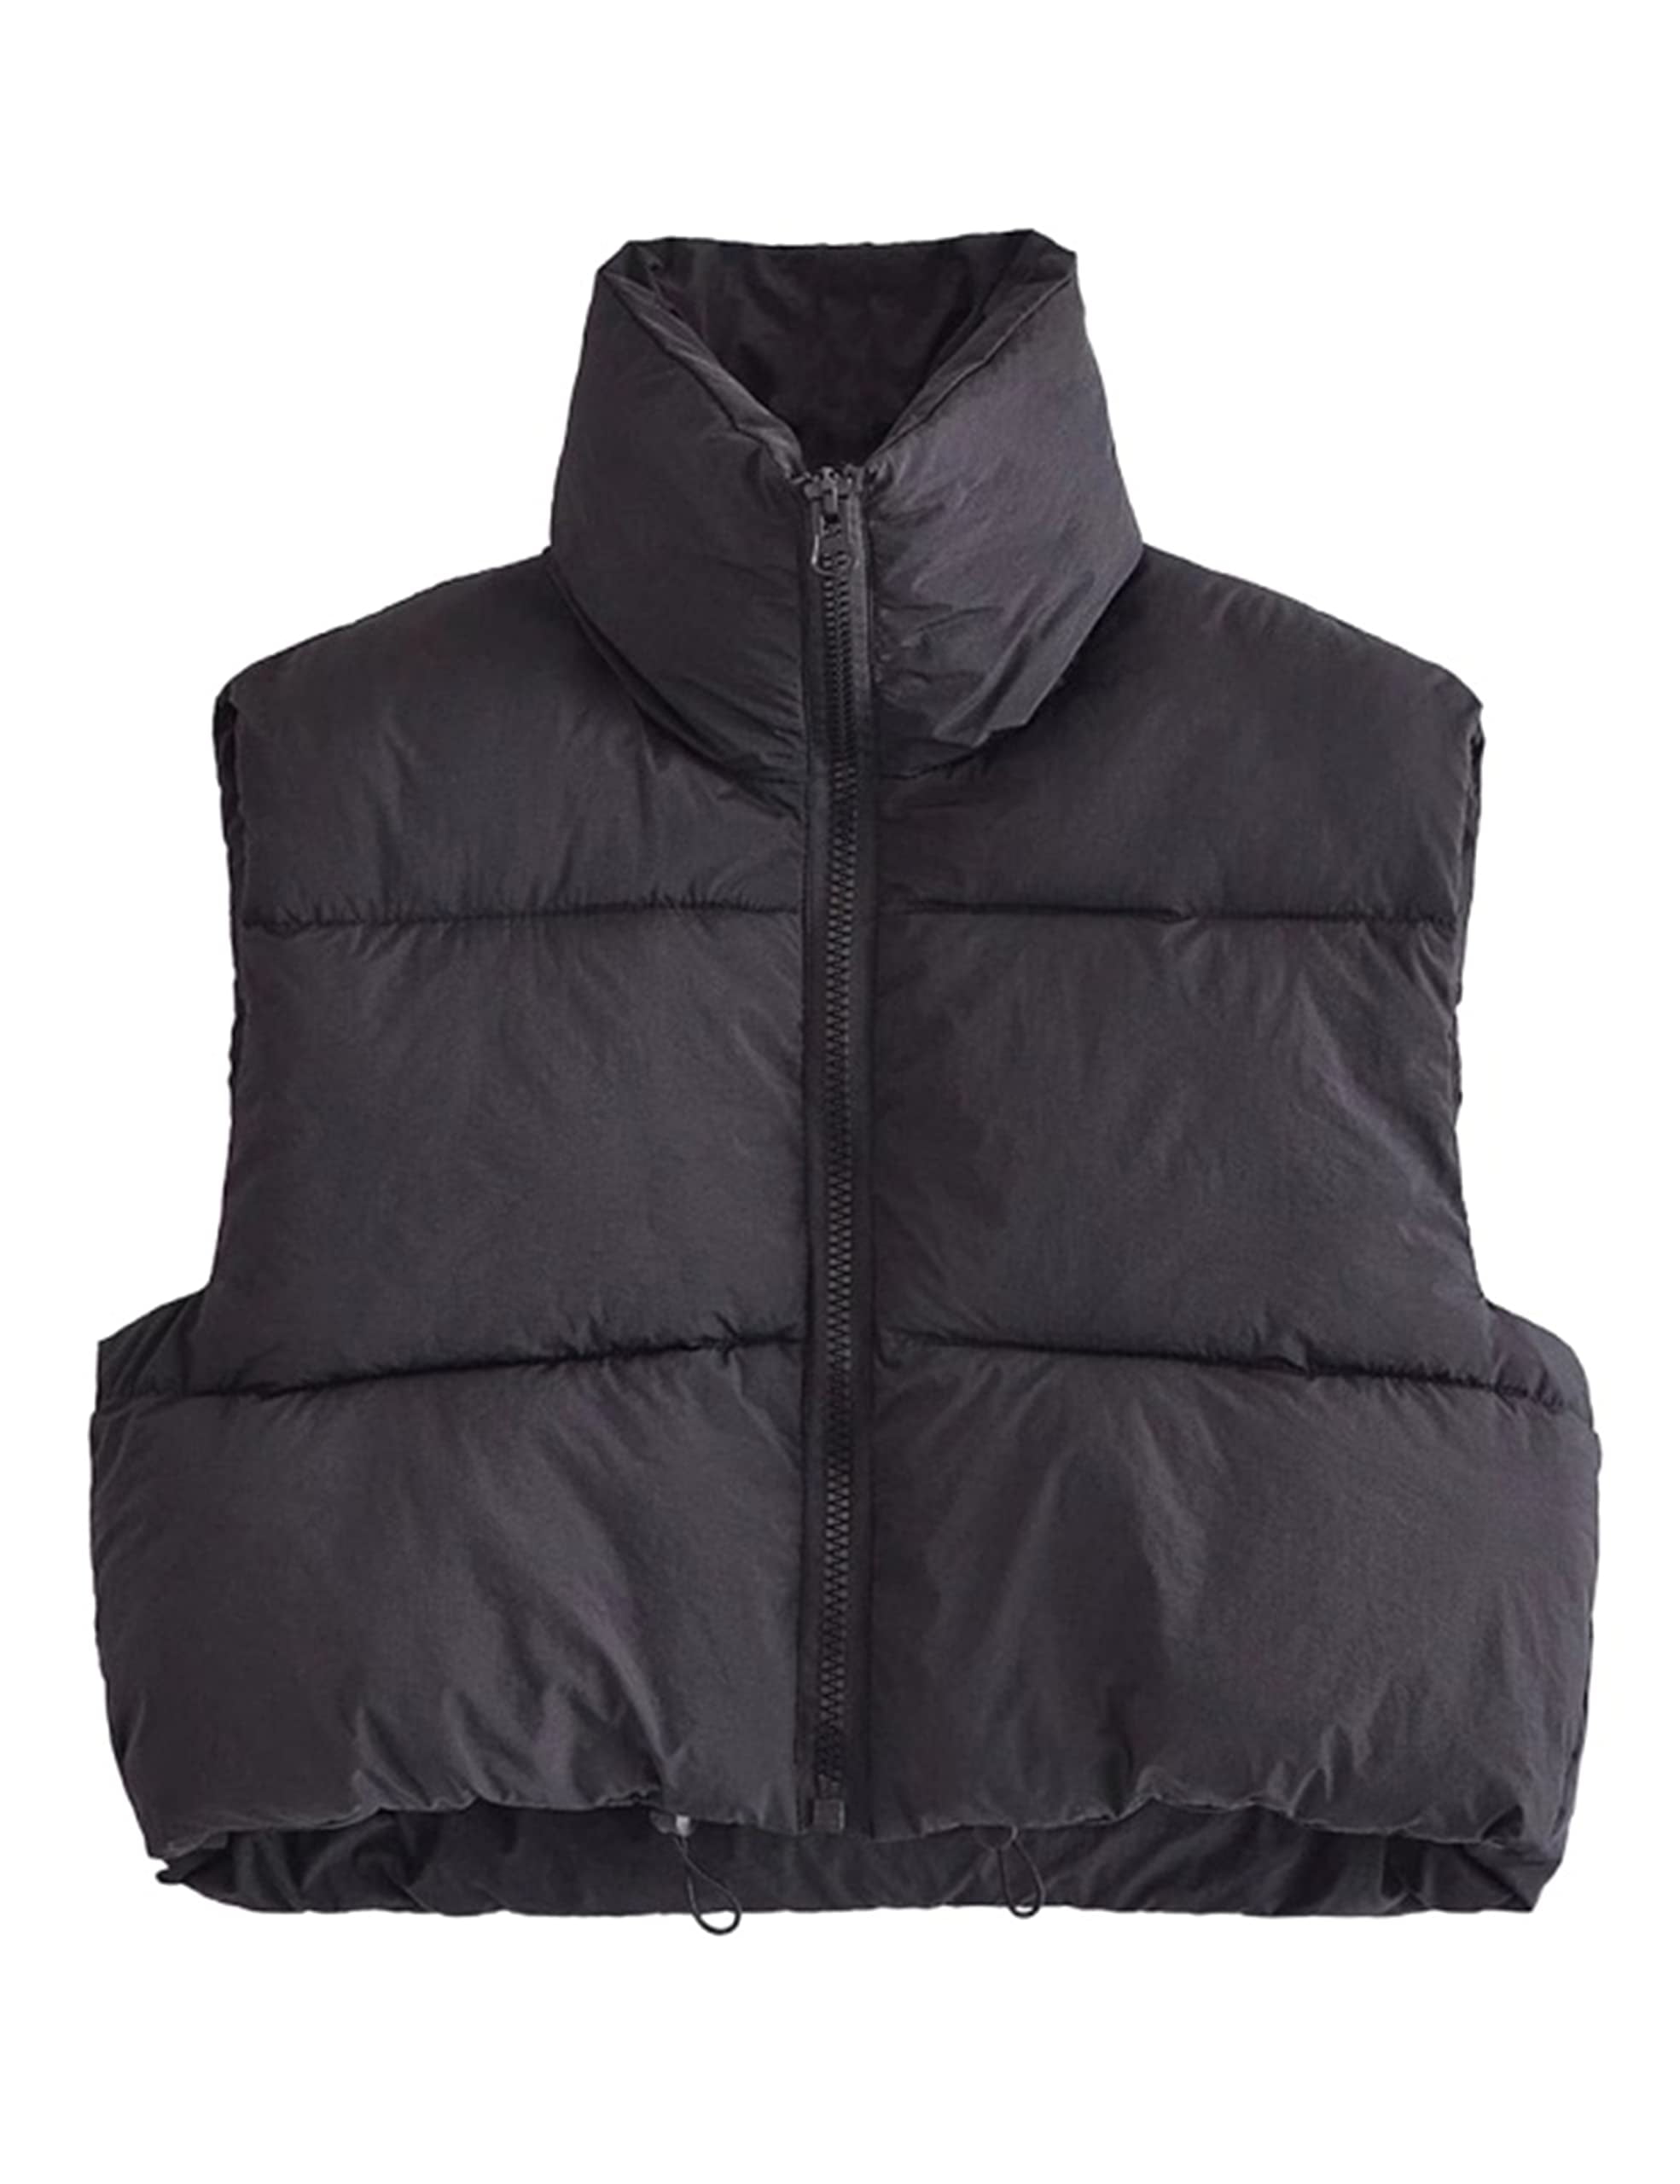 TQWQT Fall Reversible Vests for Women Sleeveless Fleece Jacket Zip Up  Hooded Vest Long Warm Winter Coat Comfy Outerwear White XL 